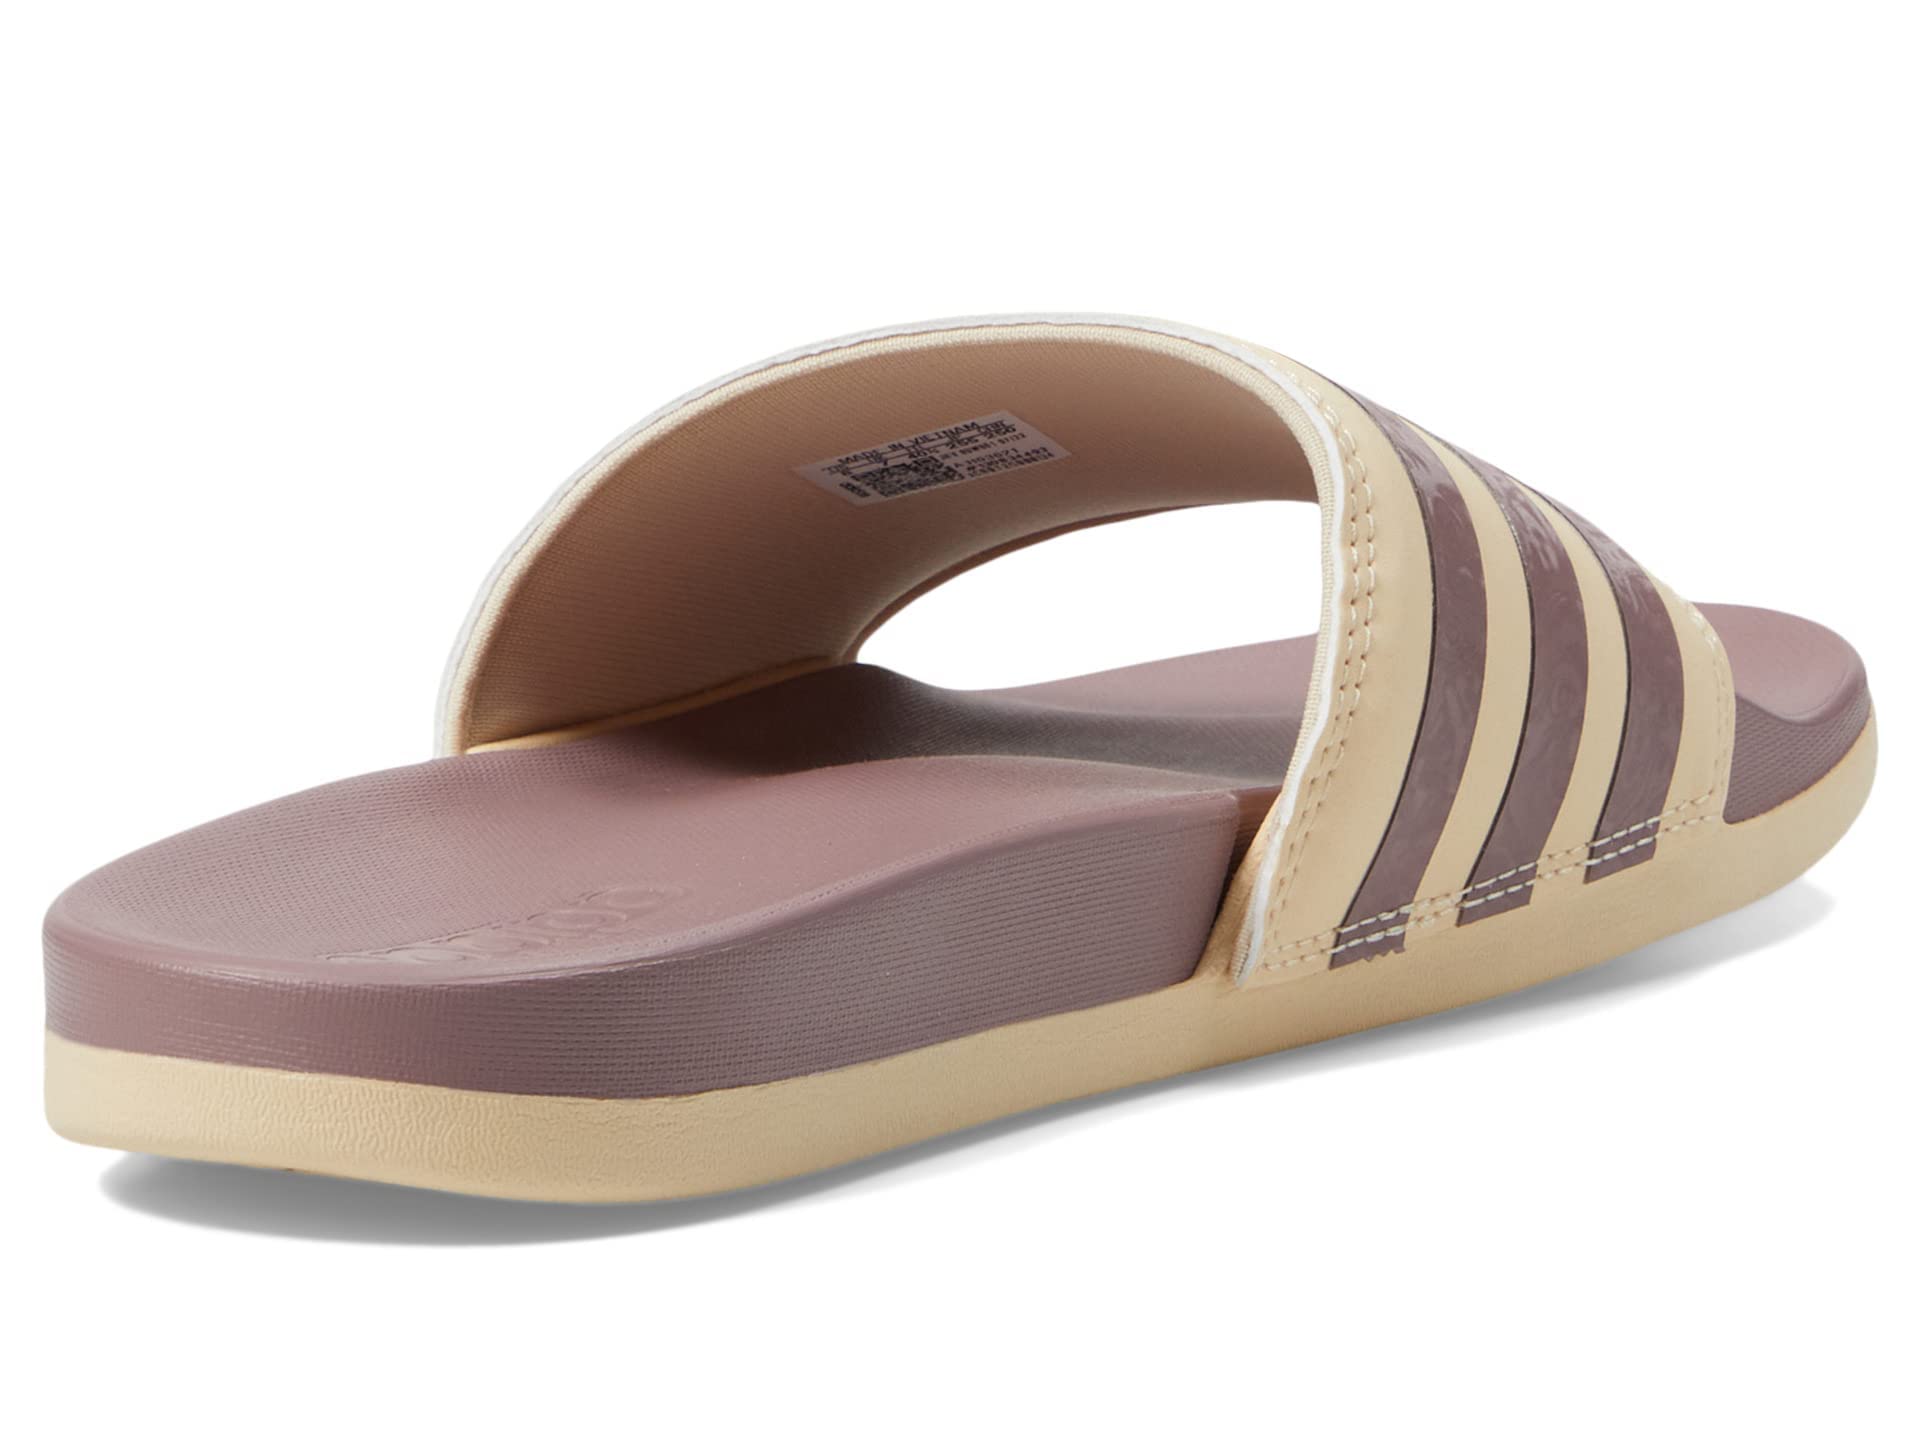 adidas Women's Adilette Comfort Slides Sandal, Sand Strata/Wonder Oxide/Sand Strata, 11